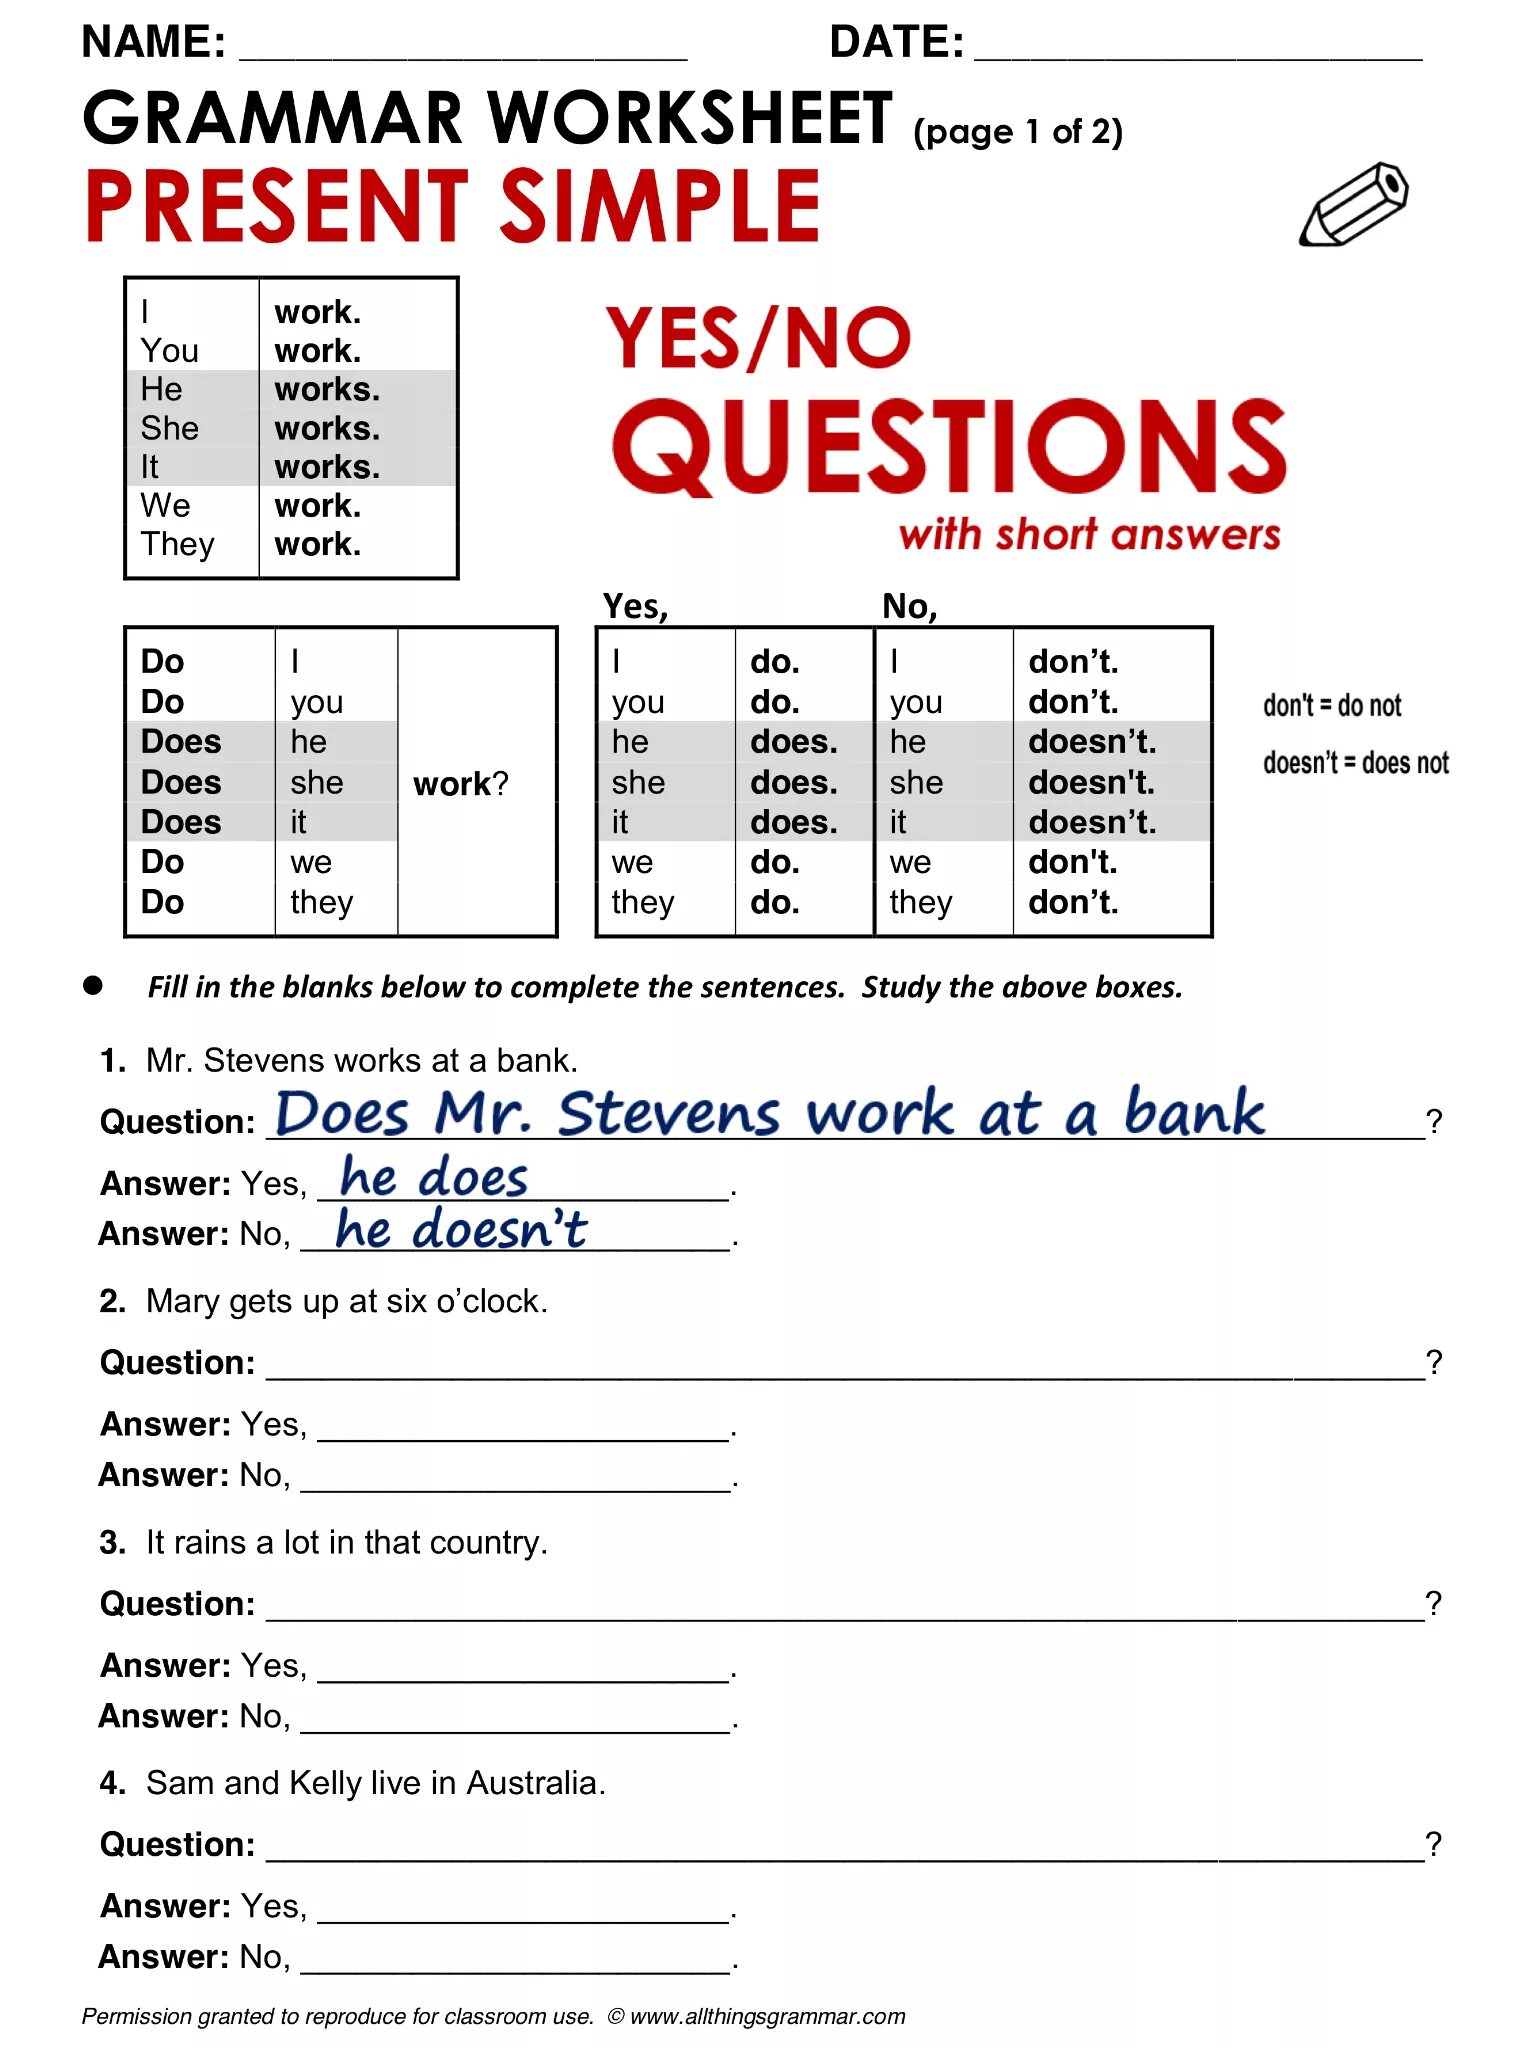 Present simple вопросы Worksheets. Специальные вопросы в present simple Worksheets. Present simple вопросы Worksheets for Kids. Вопросы Worksheets. Questions test english